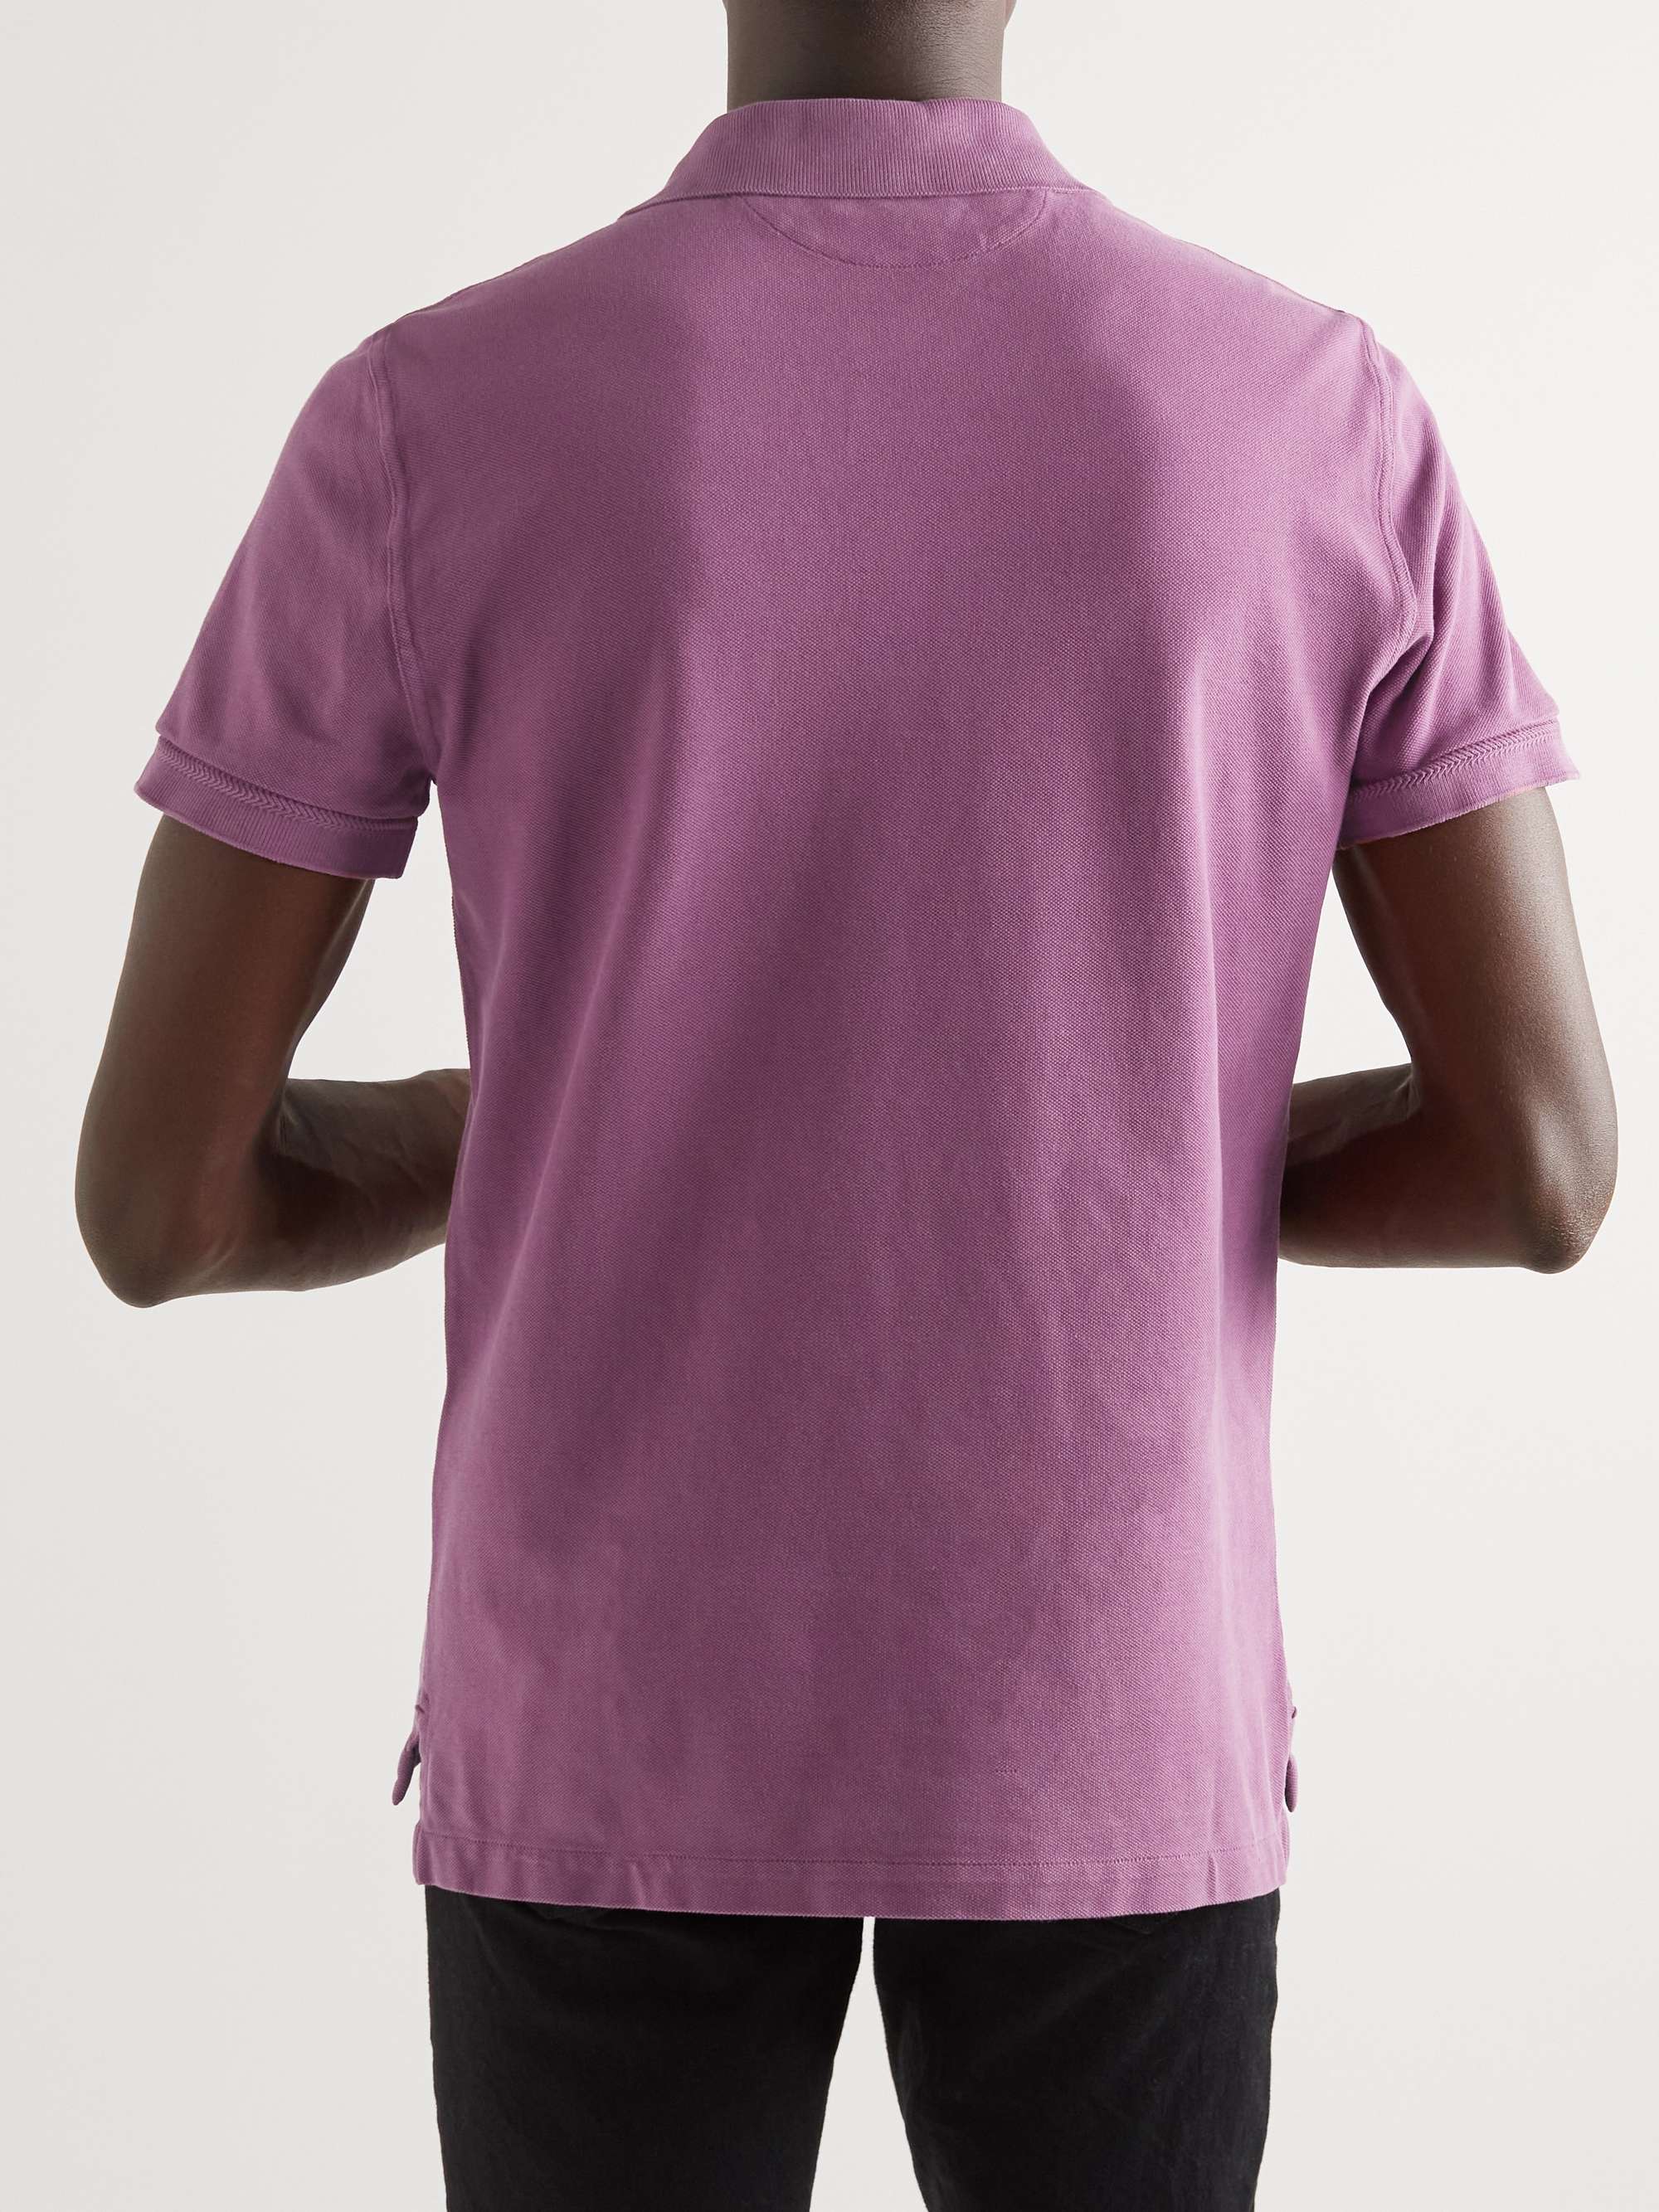 TOM FORD Slim-Fit Garment-Dyed Cotton-Piqué Polo Shirt